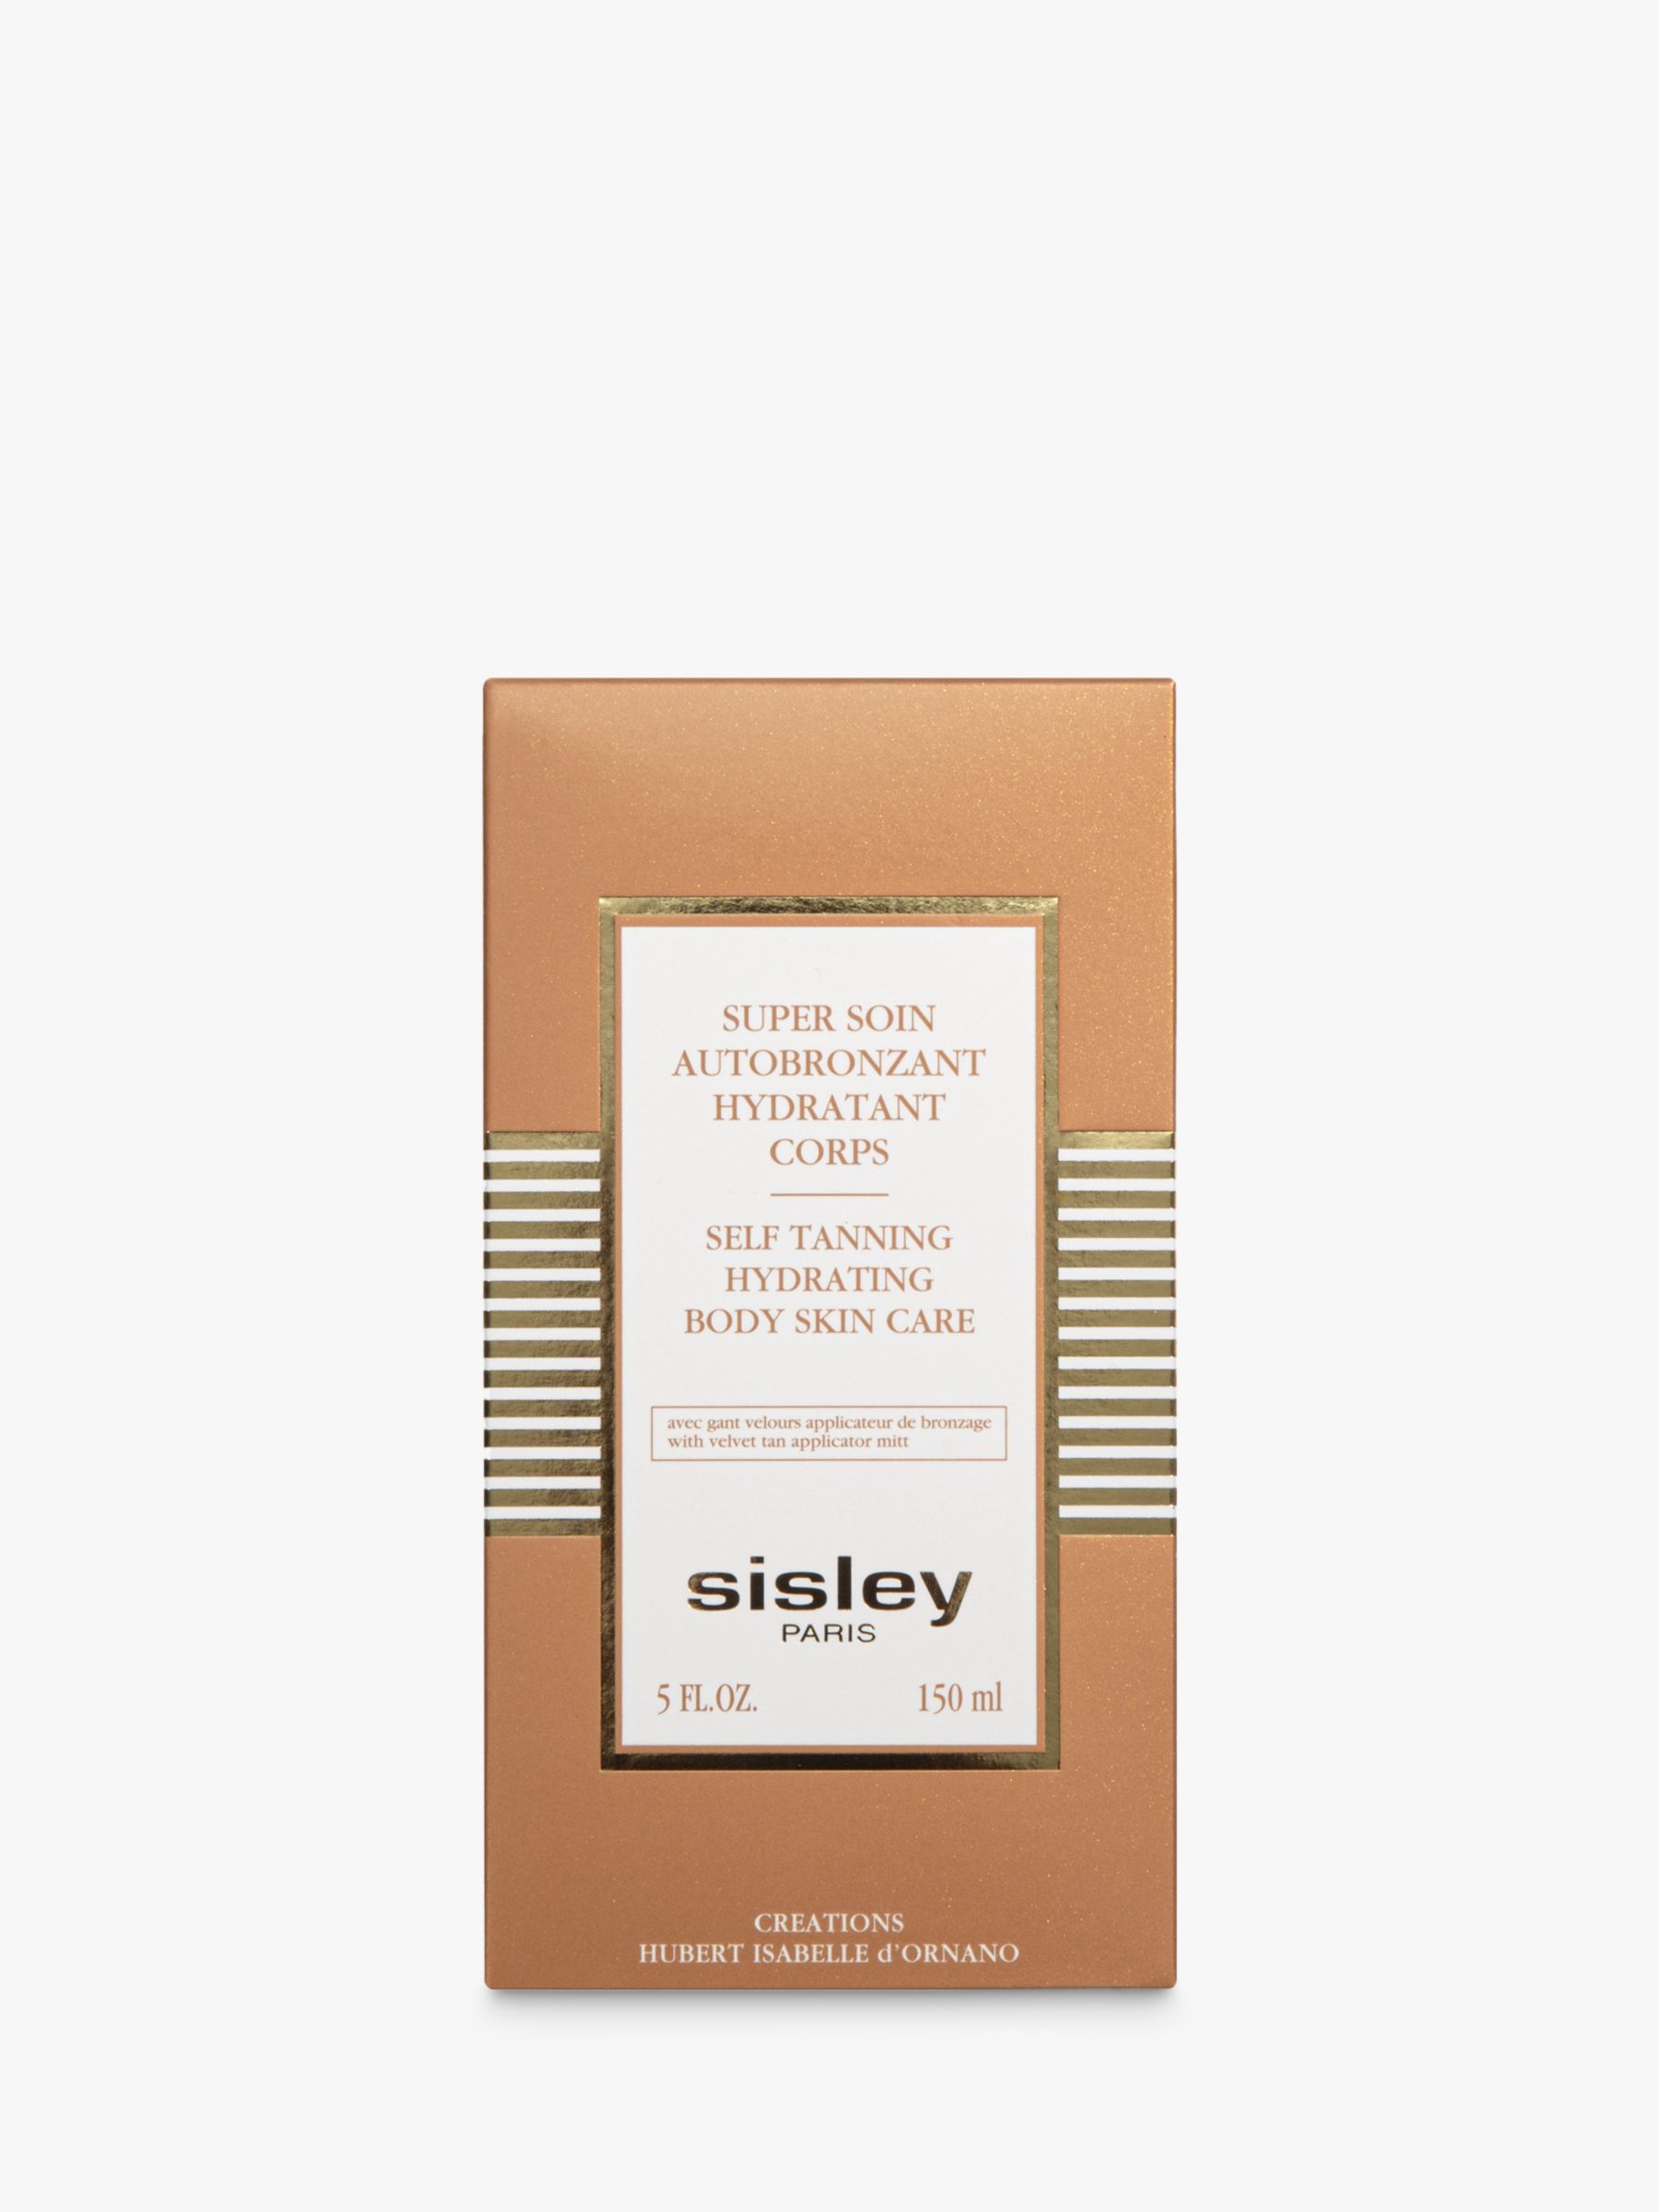 Sisley-Paris Self Tanning Hydrating Body Skin Care, 150ml